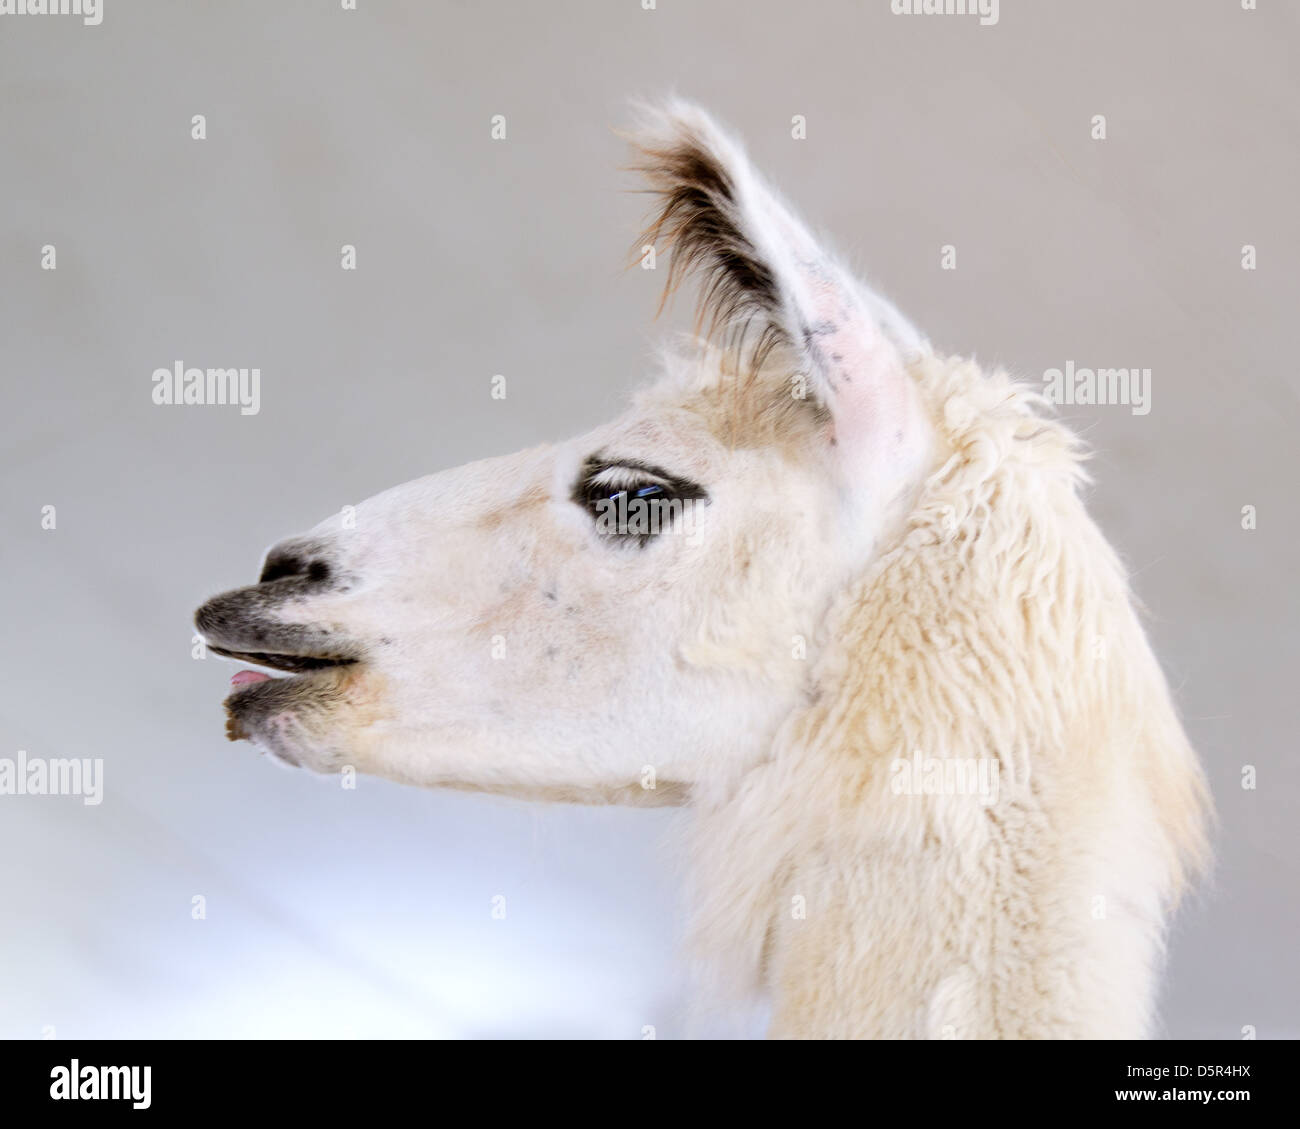 White llama portrait against a white ceiling Stock Photo